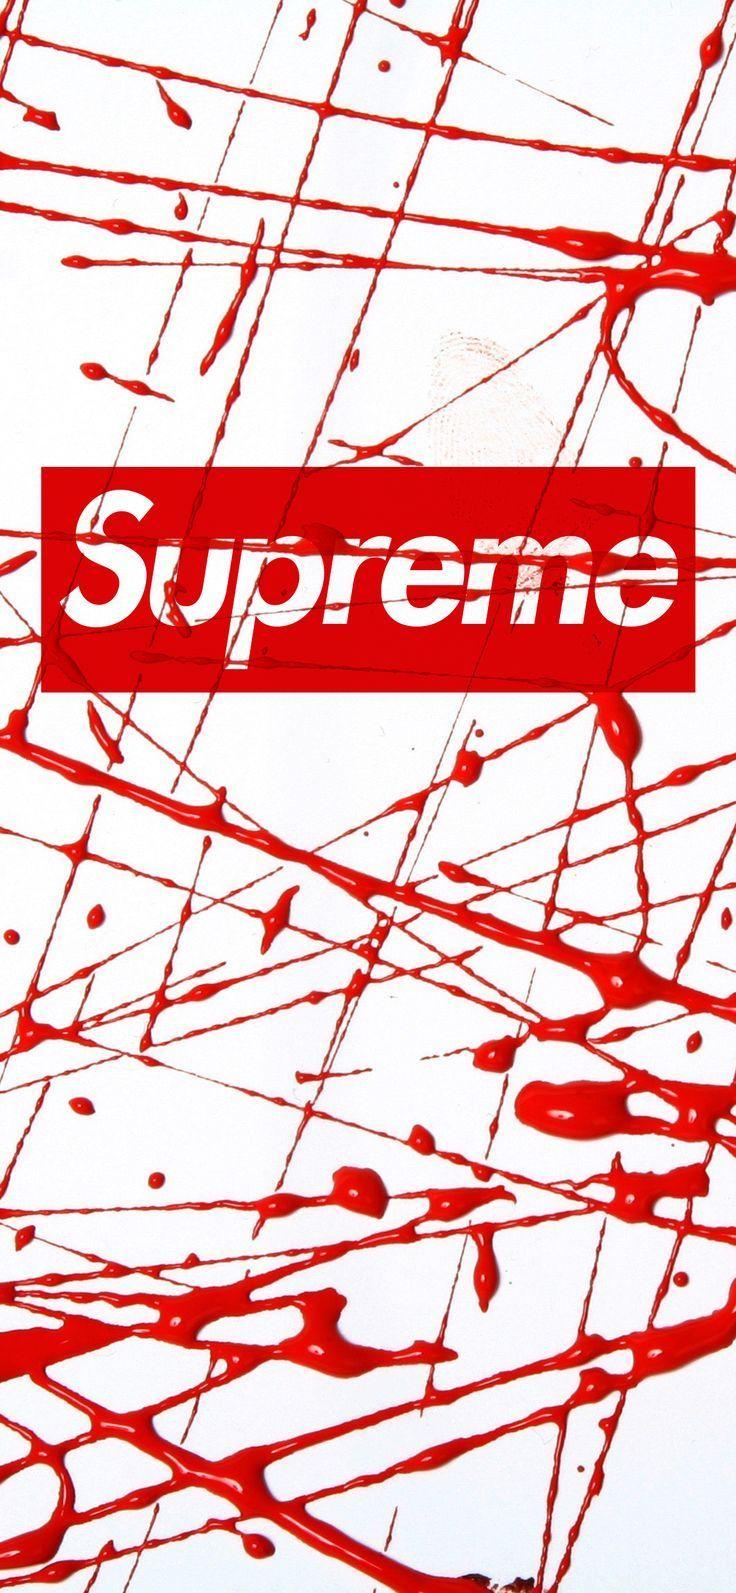 Download Supreme and Gucci collaborations​ Wallpaper